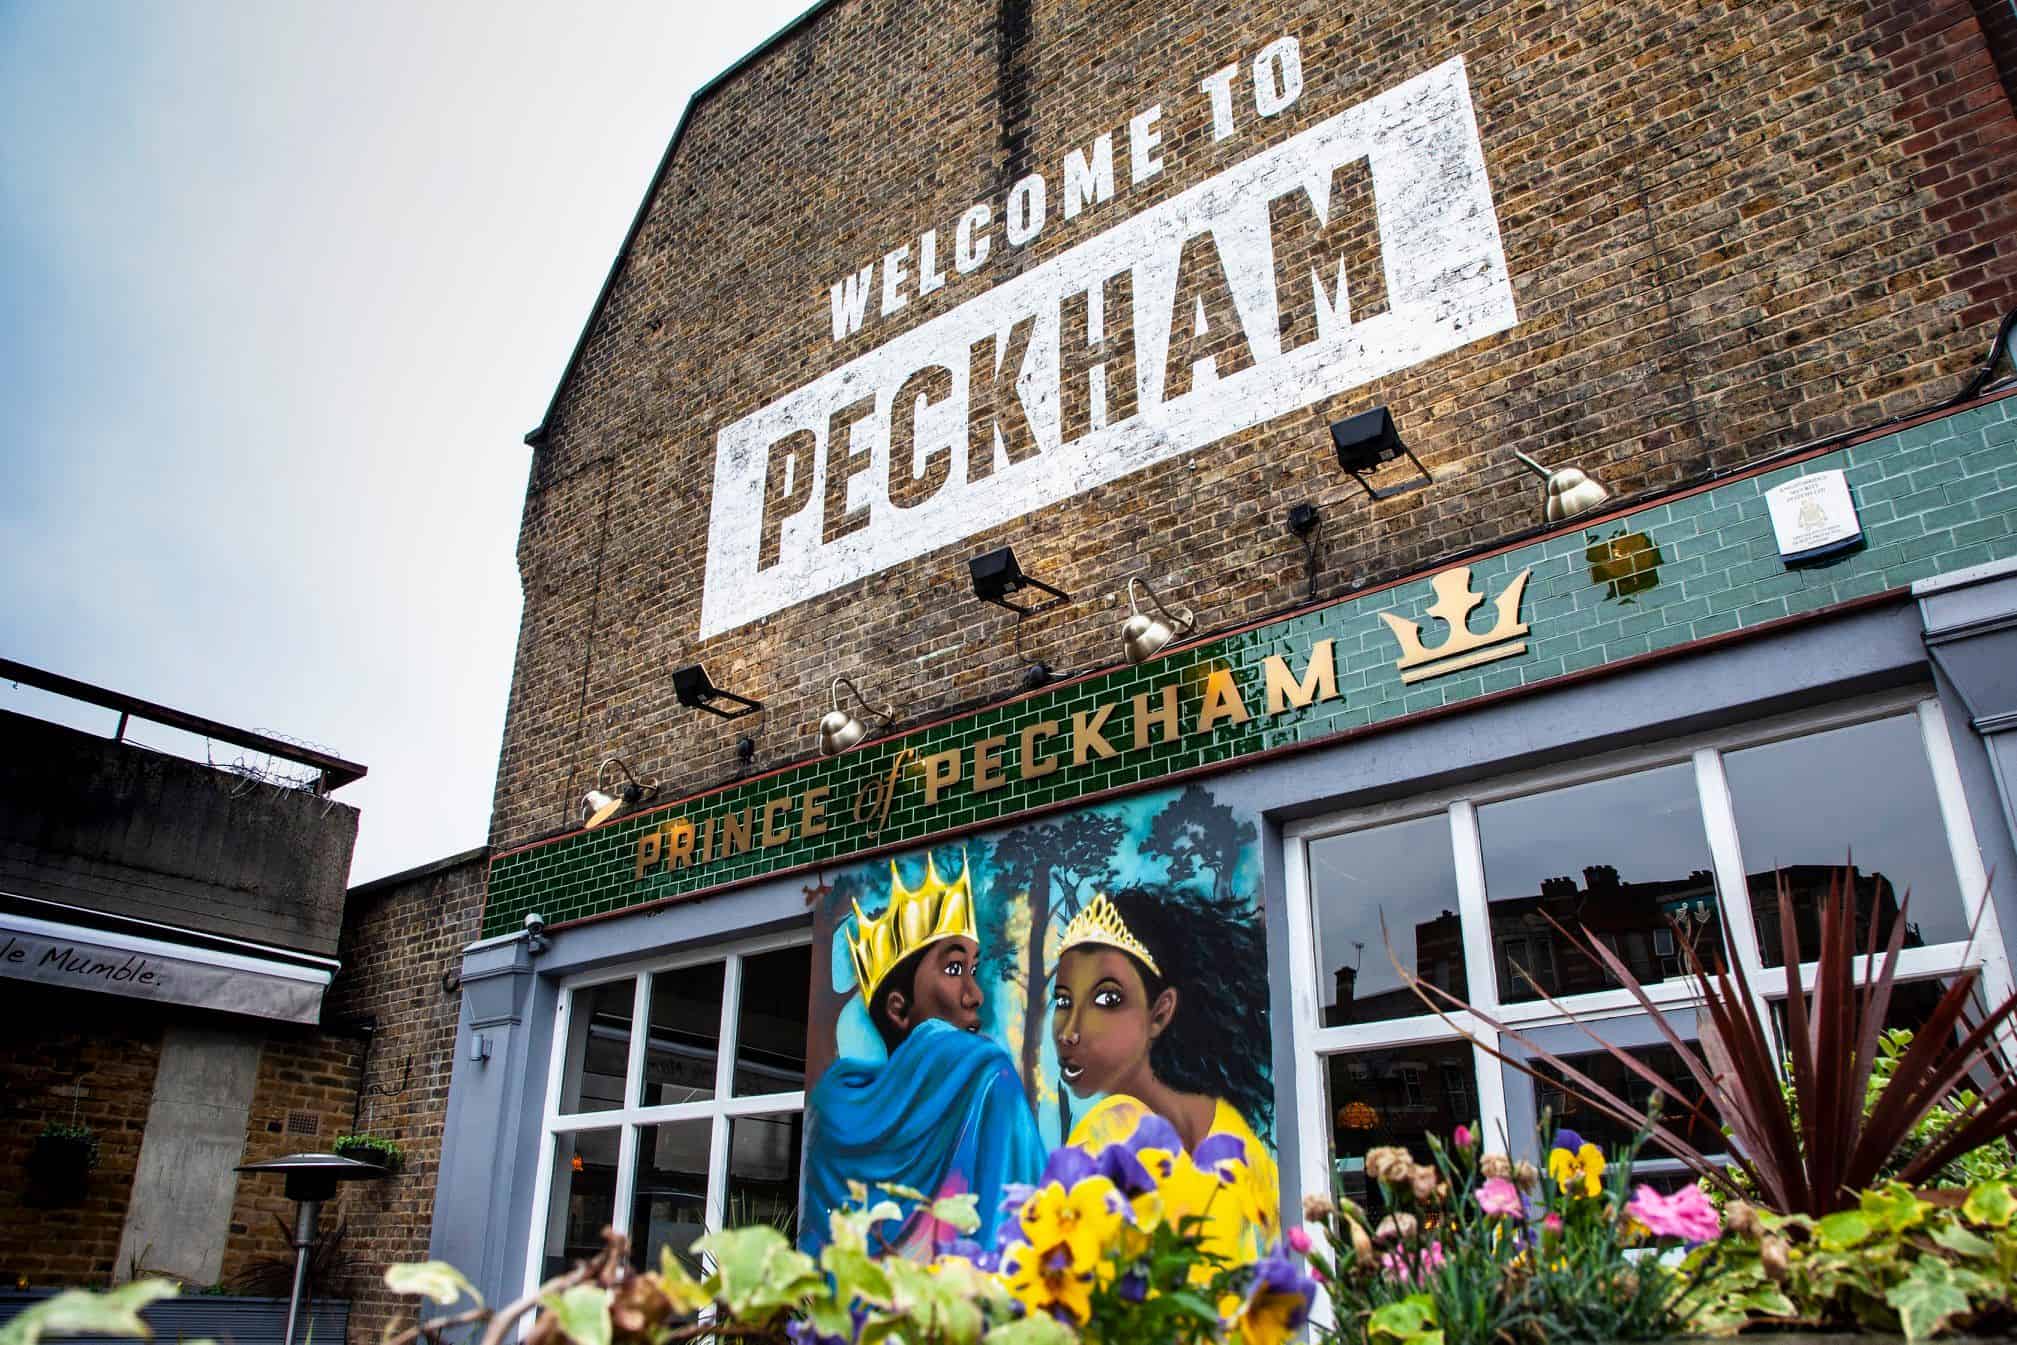 Image: Prince of Peckham